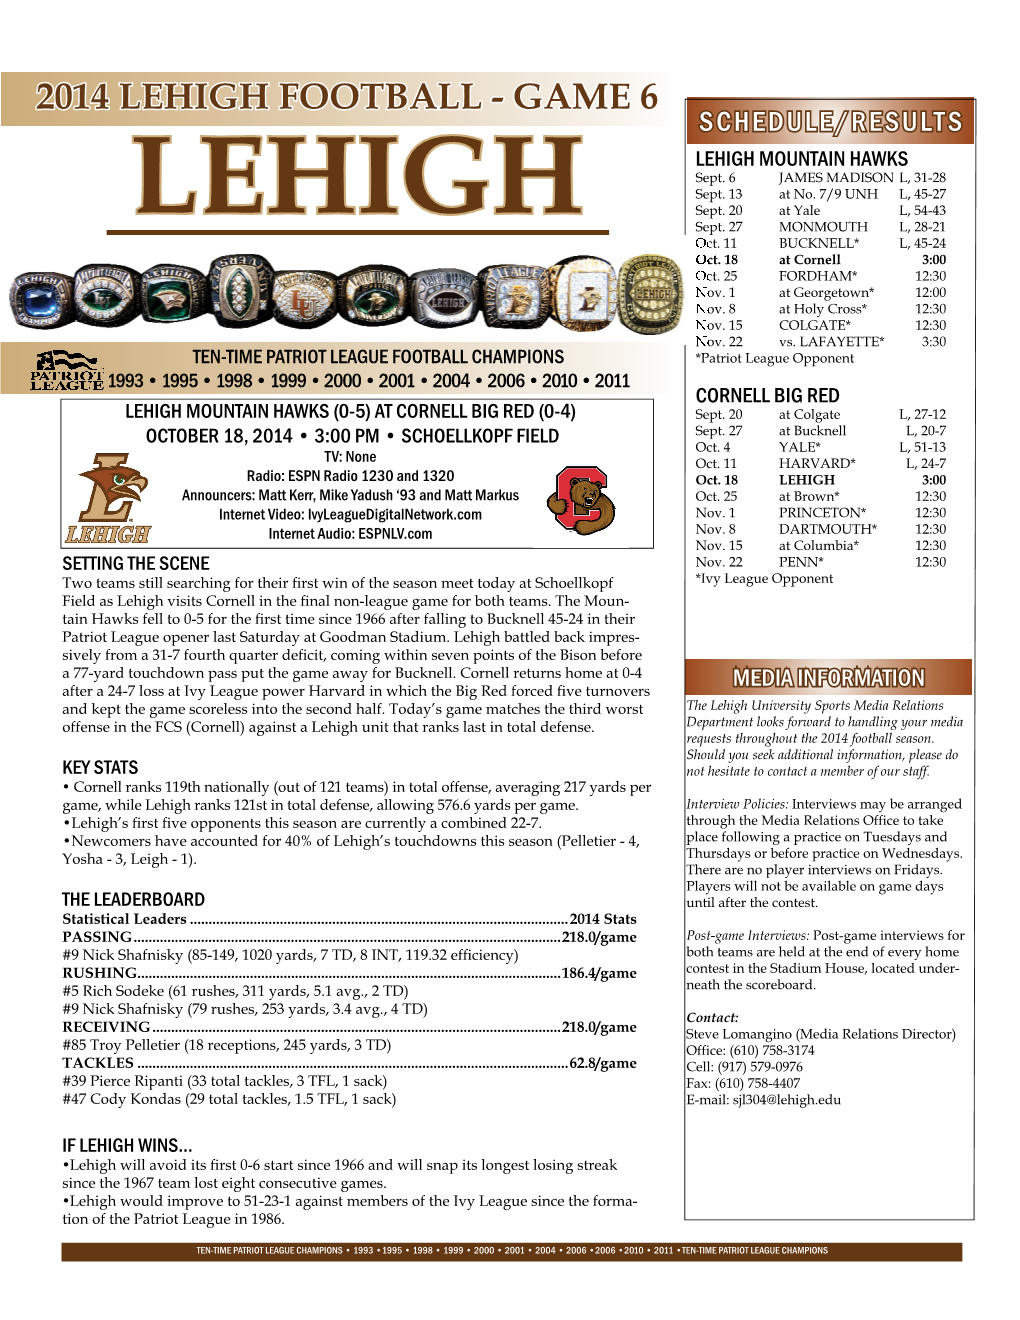 Lehigh University Athletics